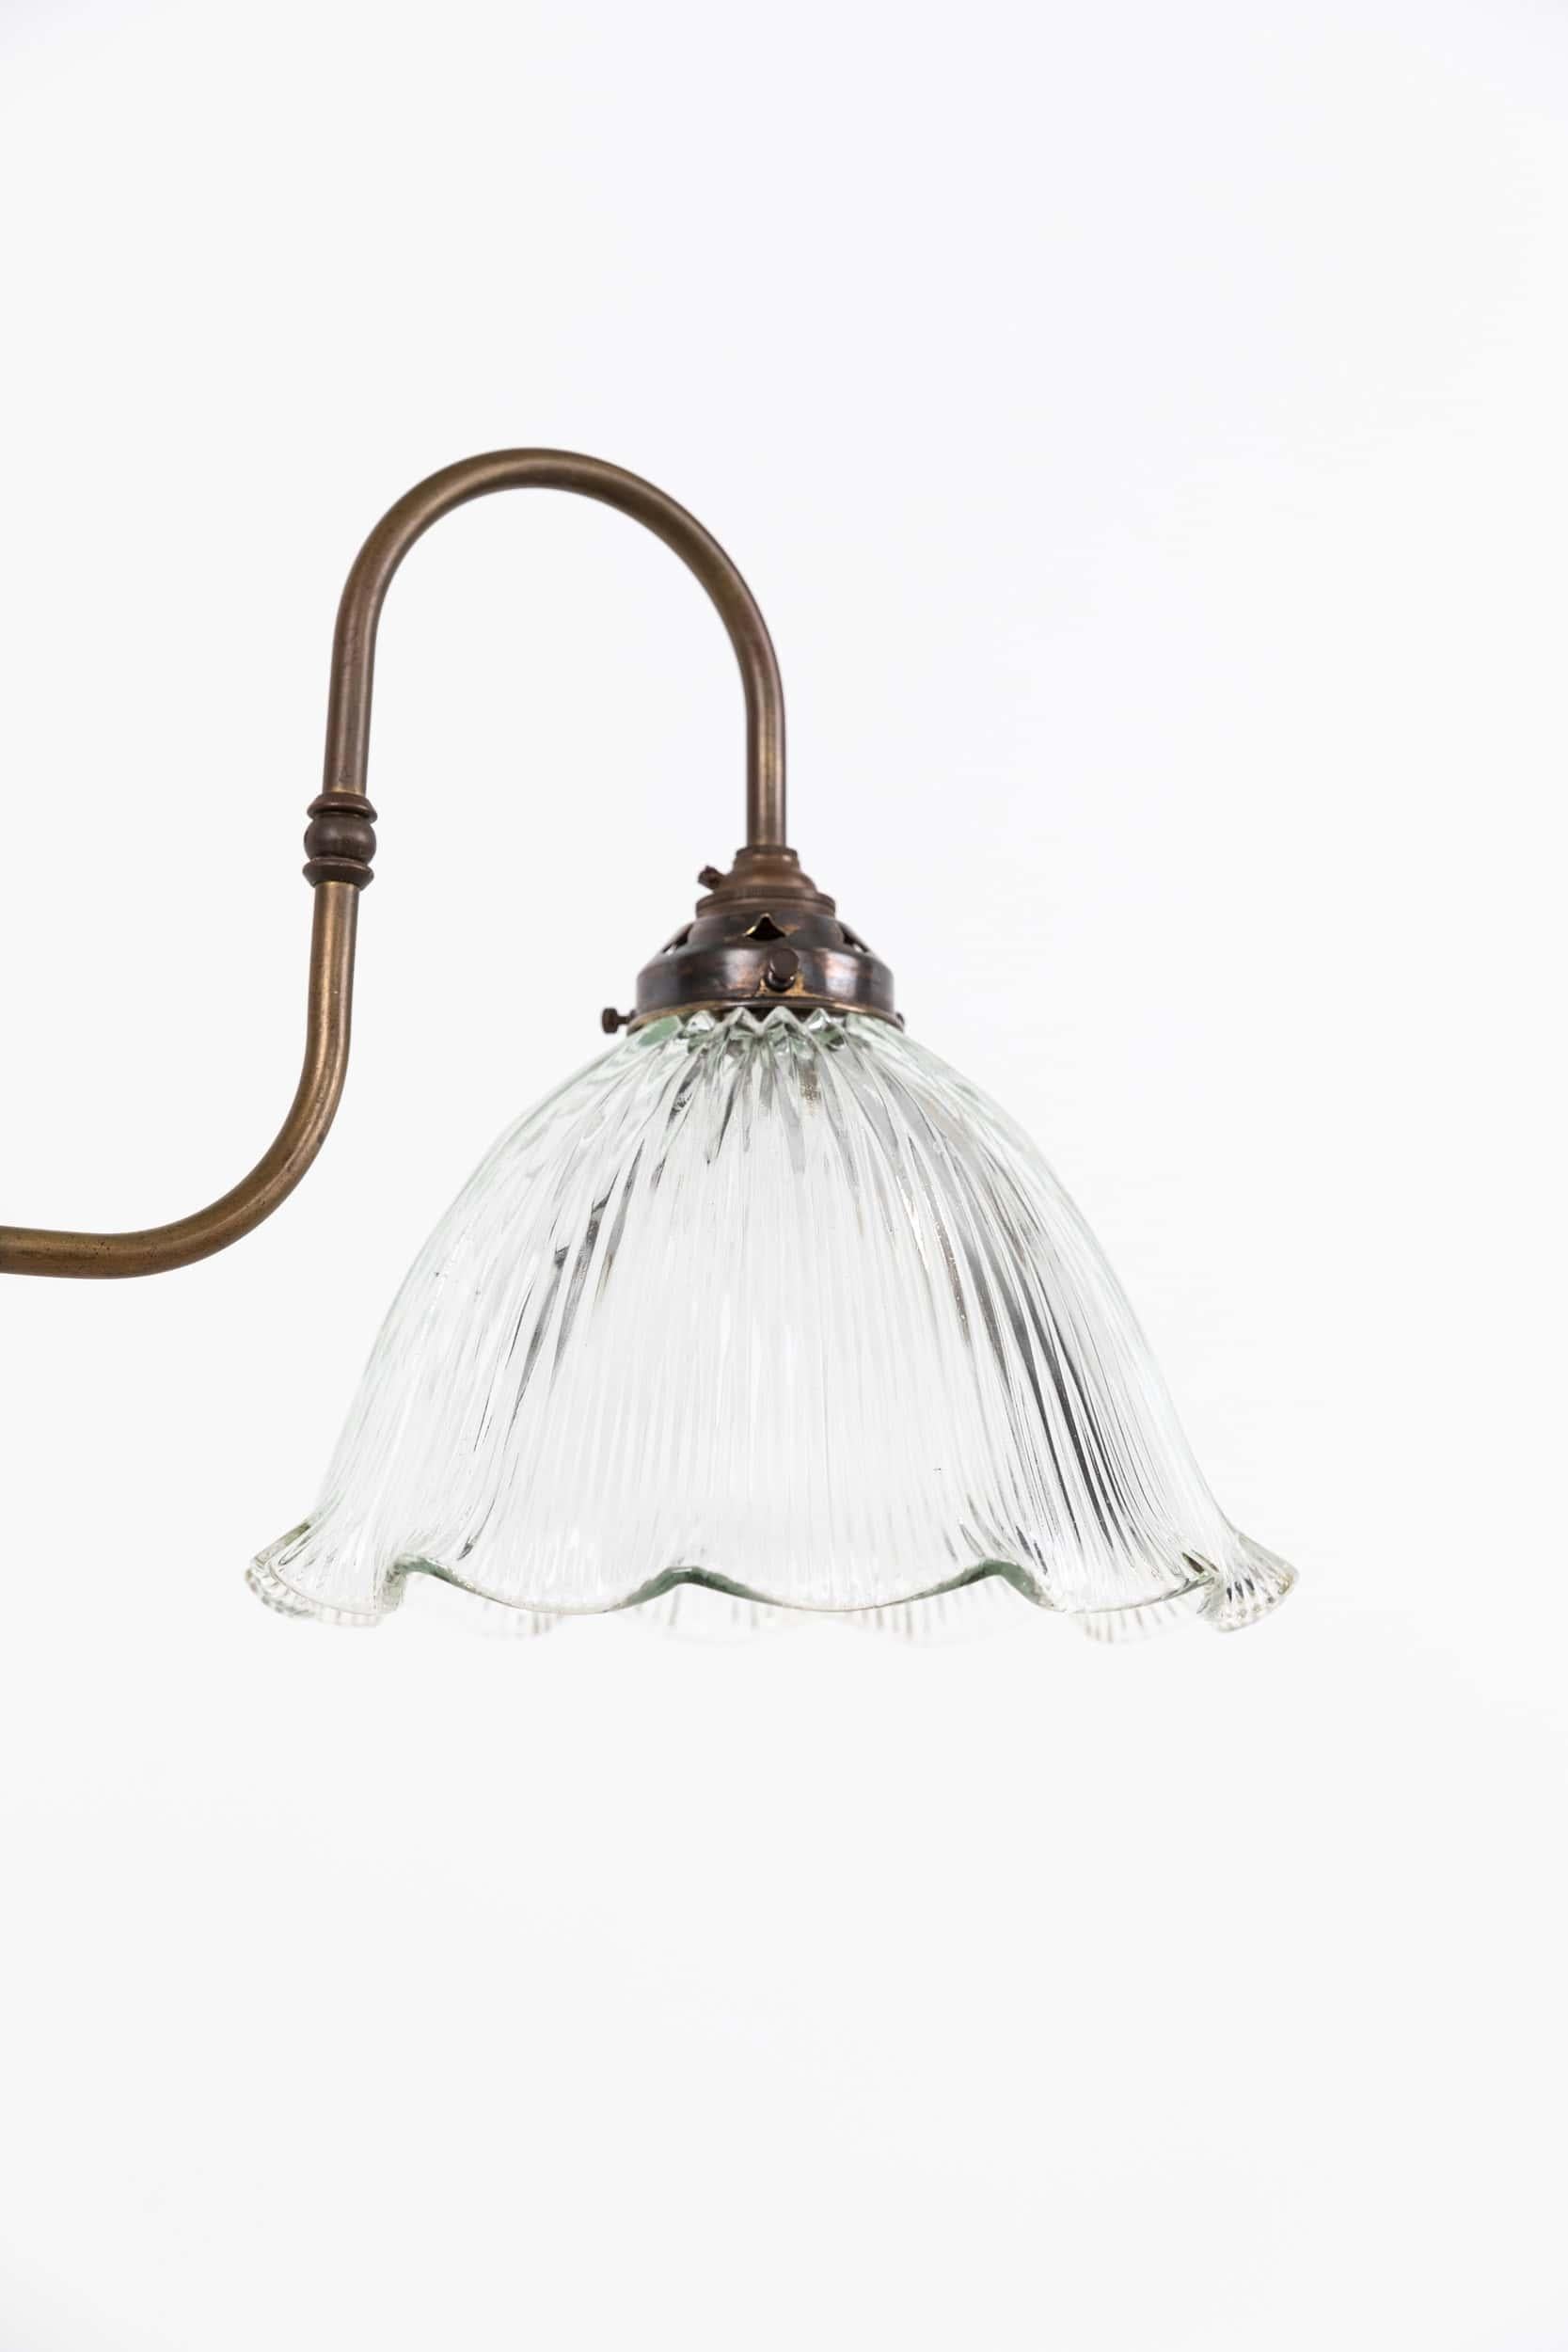 English Antique Arts & Crafts Brass Prismatic Glass Ceiling Pendant Light Lamp, C.1920 For Sale